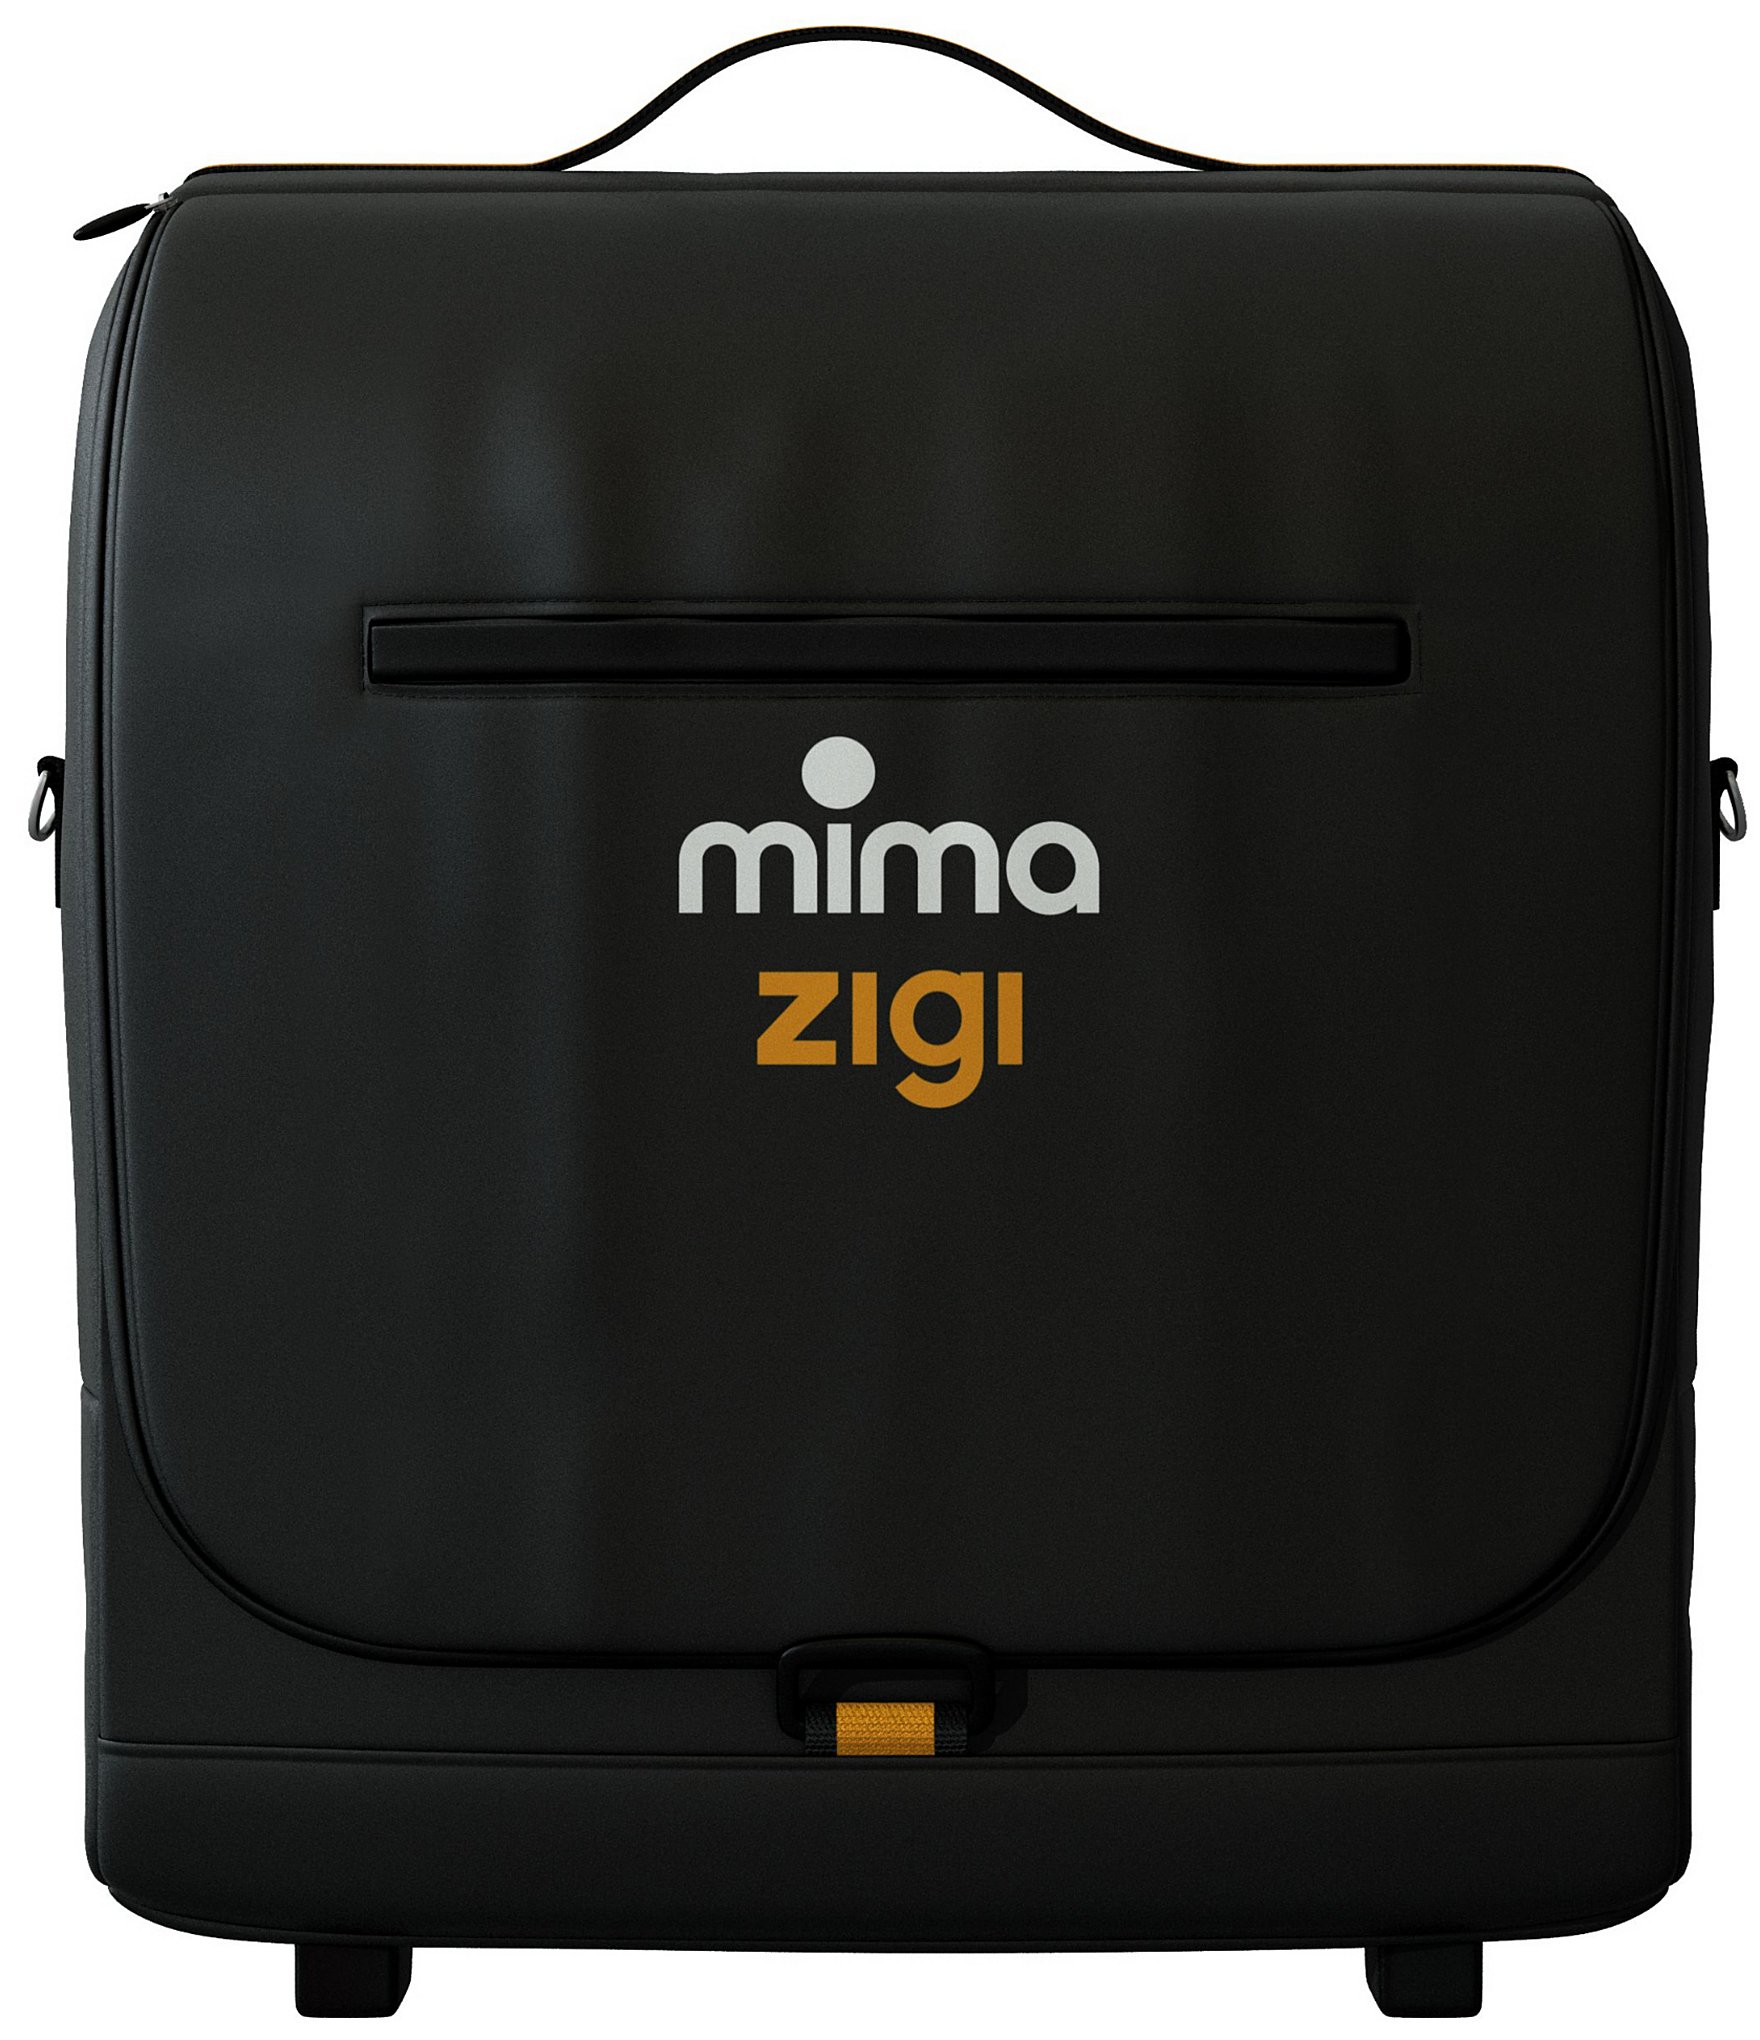 compact stroller travel bag